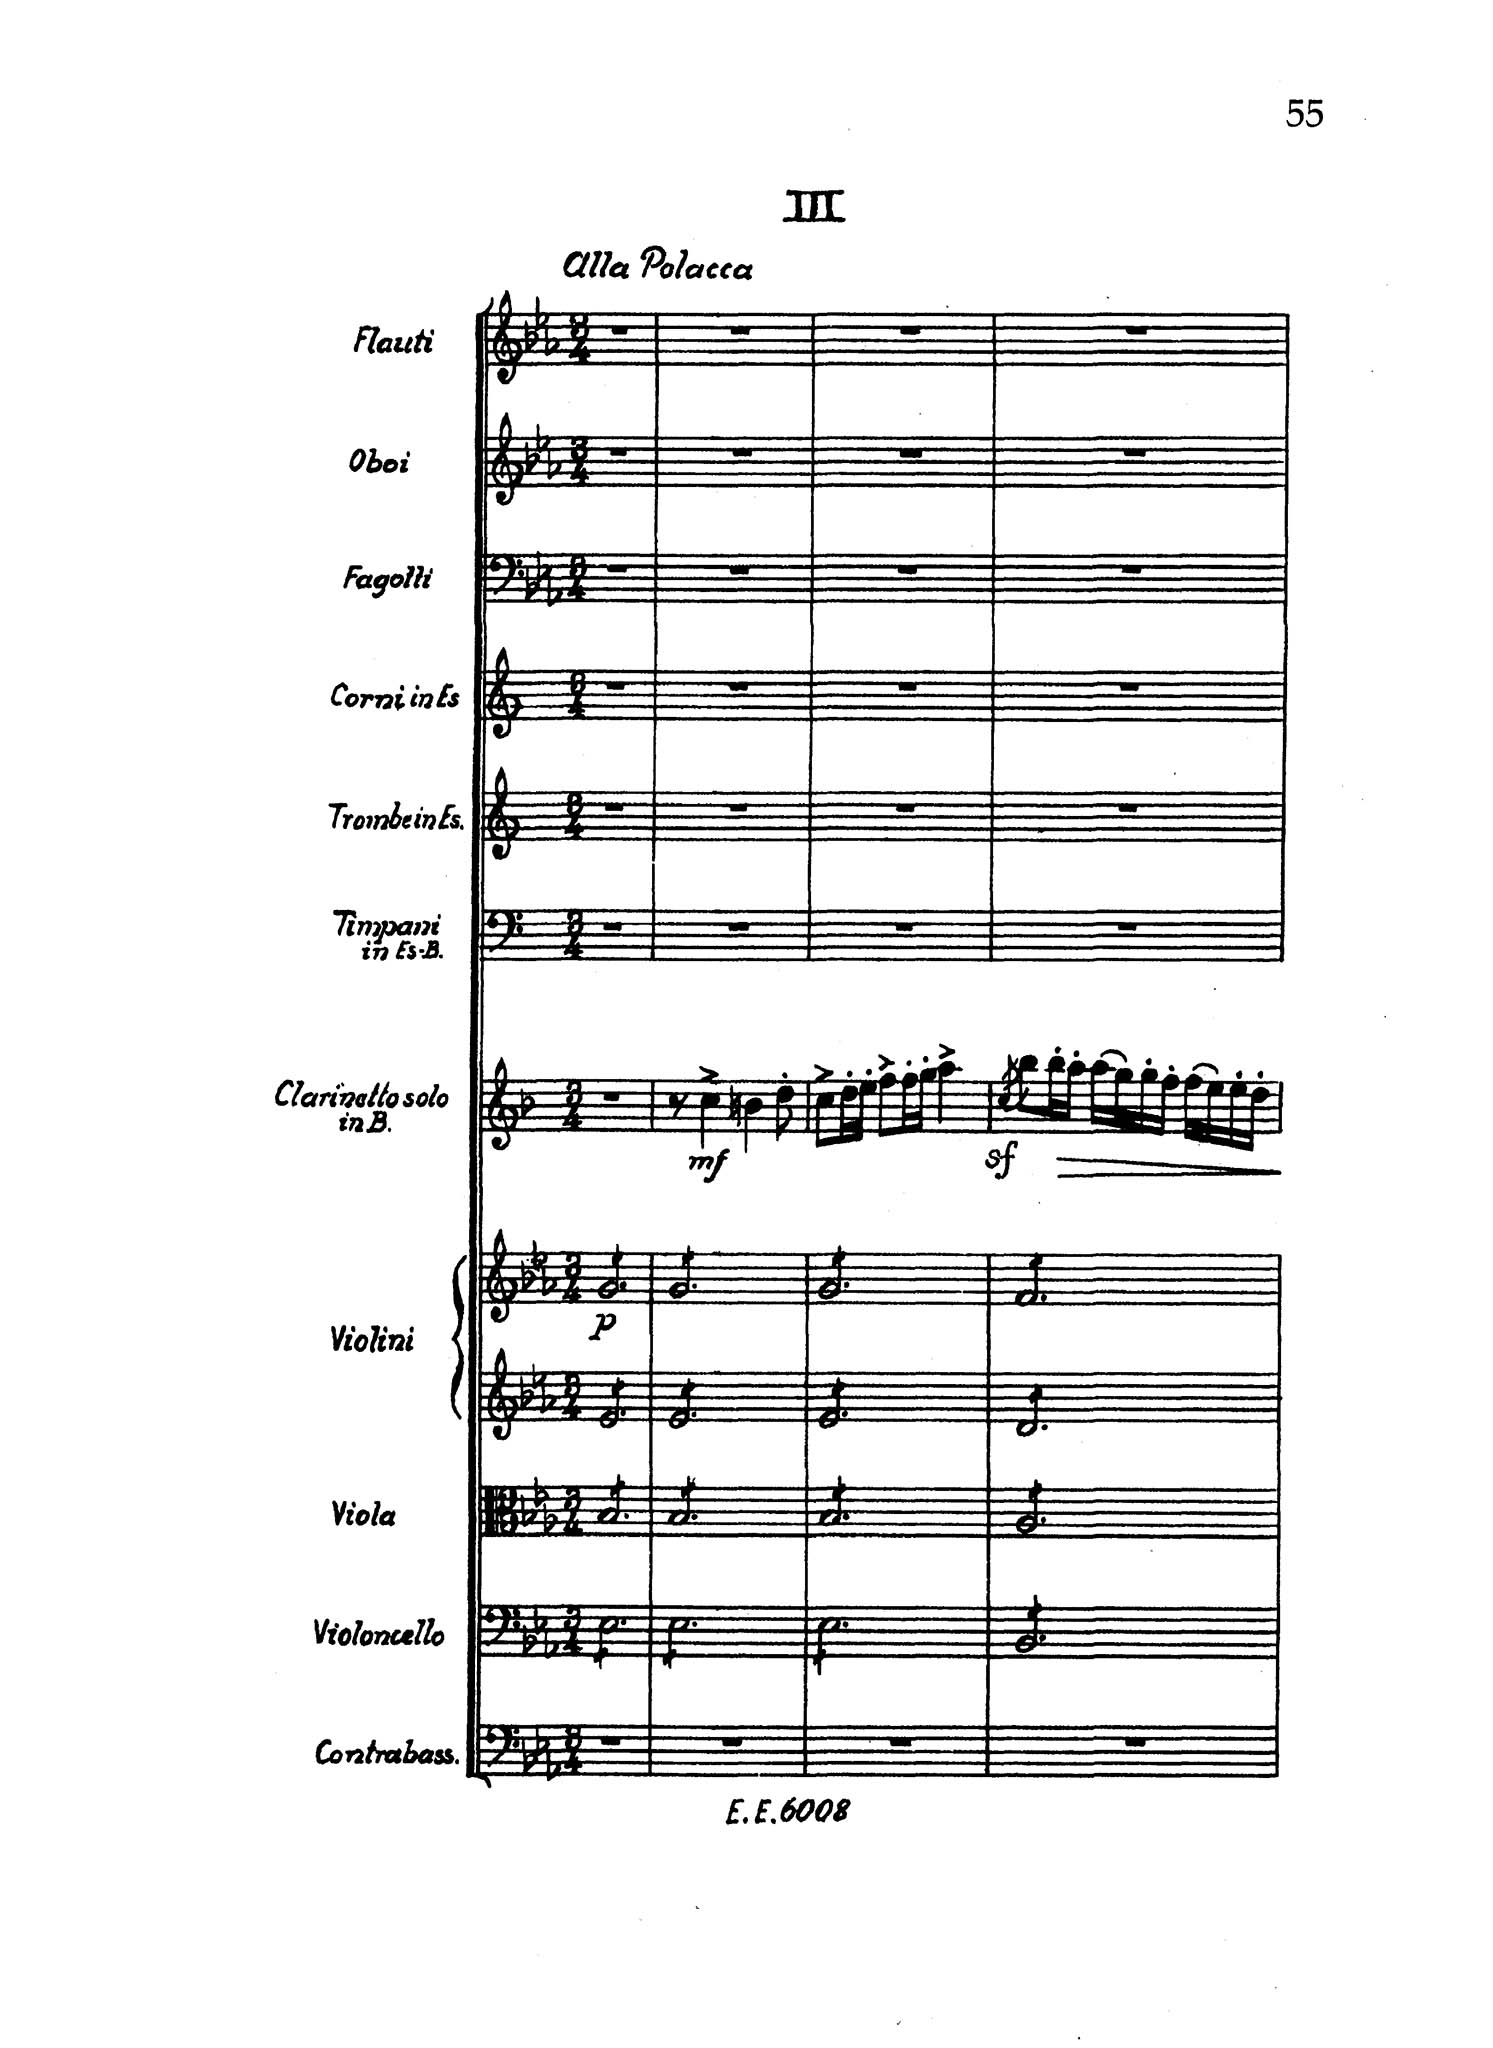 Clarinet Concerto No. 2 in E-flat Major, Op. 74 - Movement 3